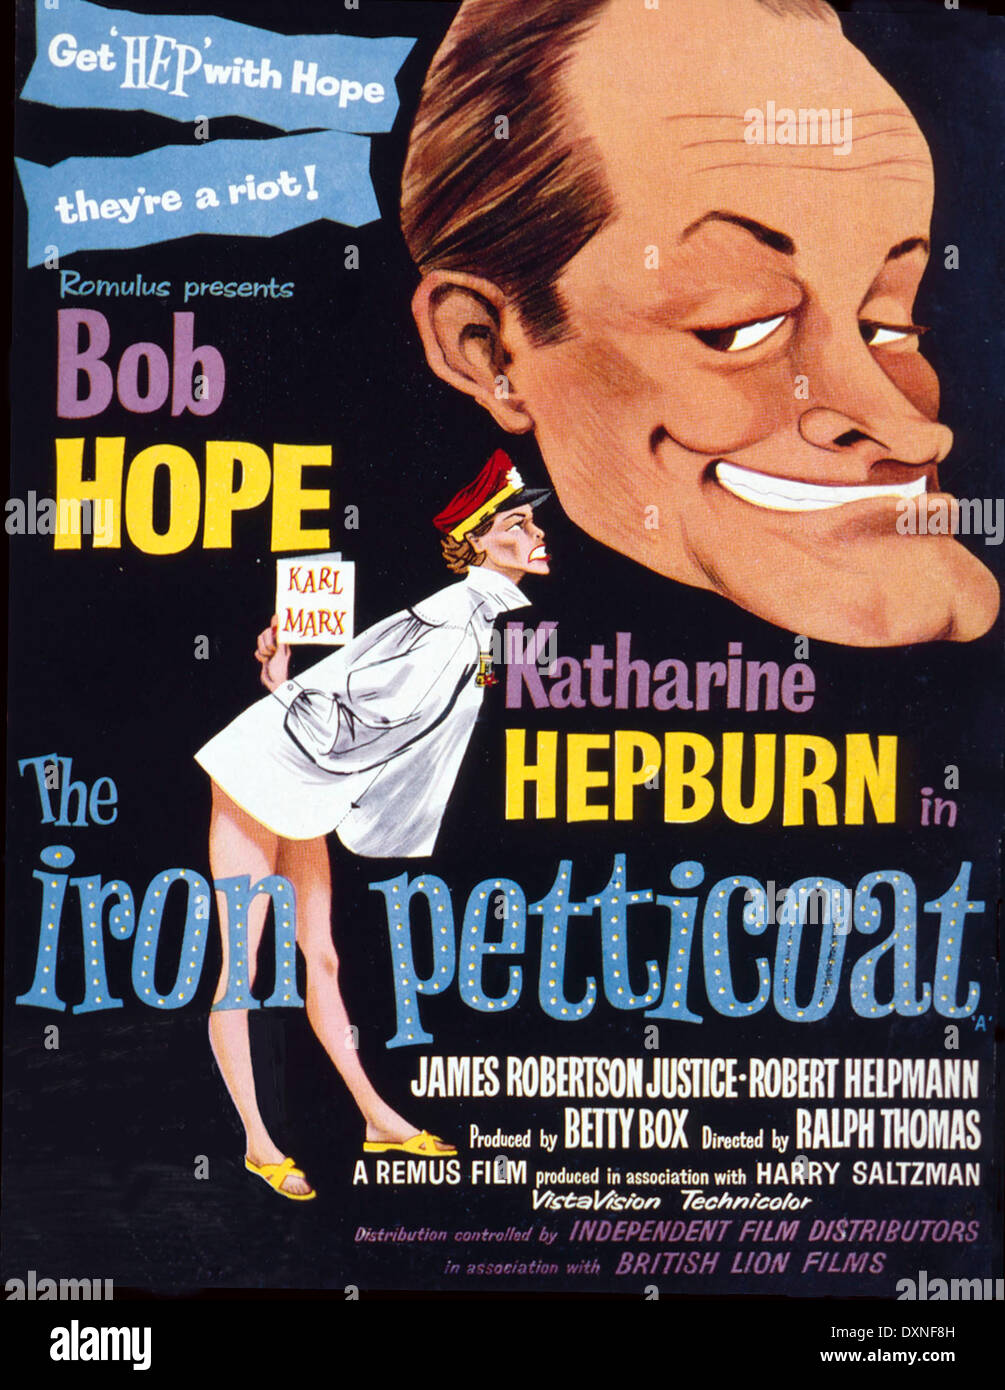 Iron Pettycoat (Bop Hope) 1956